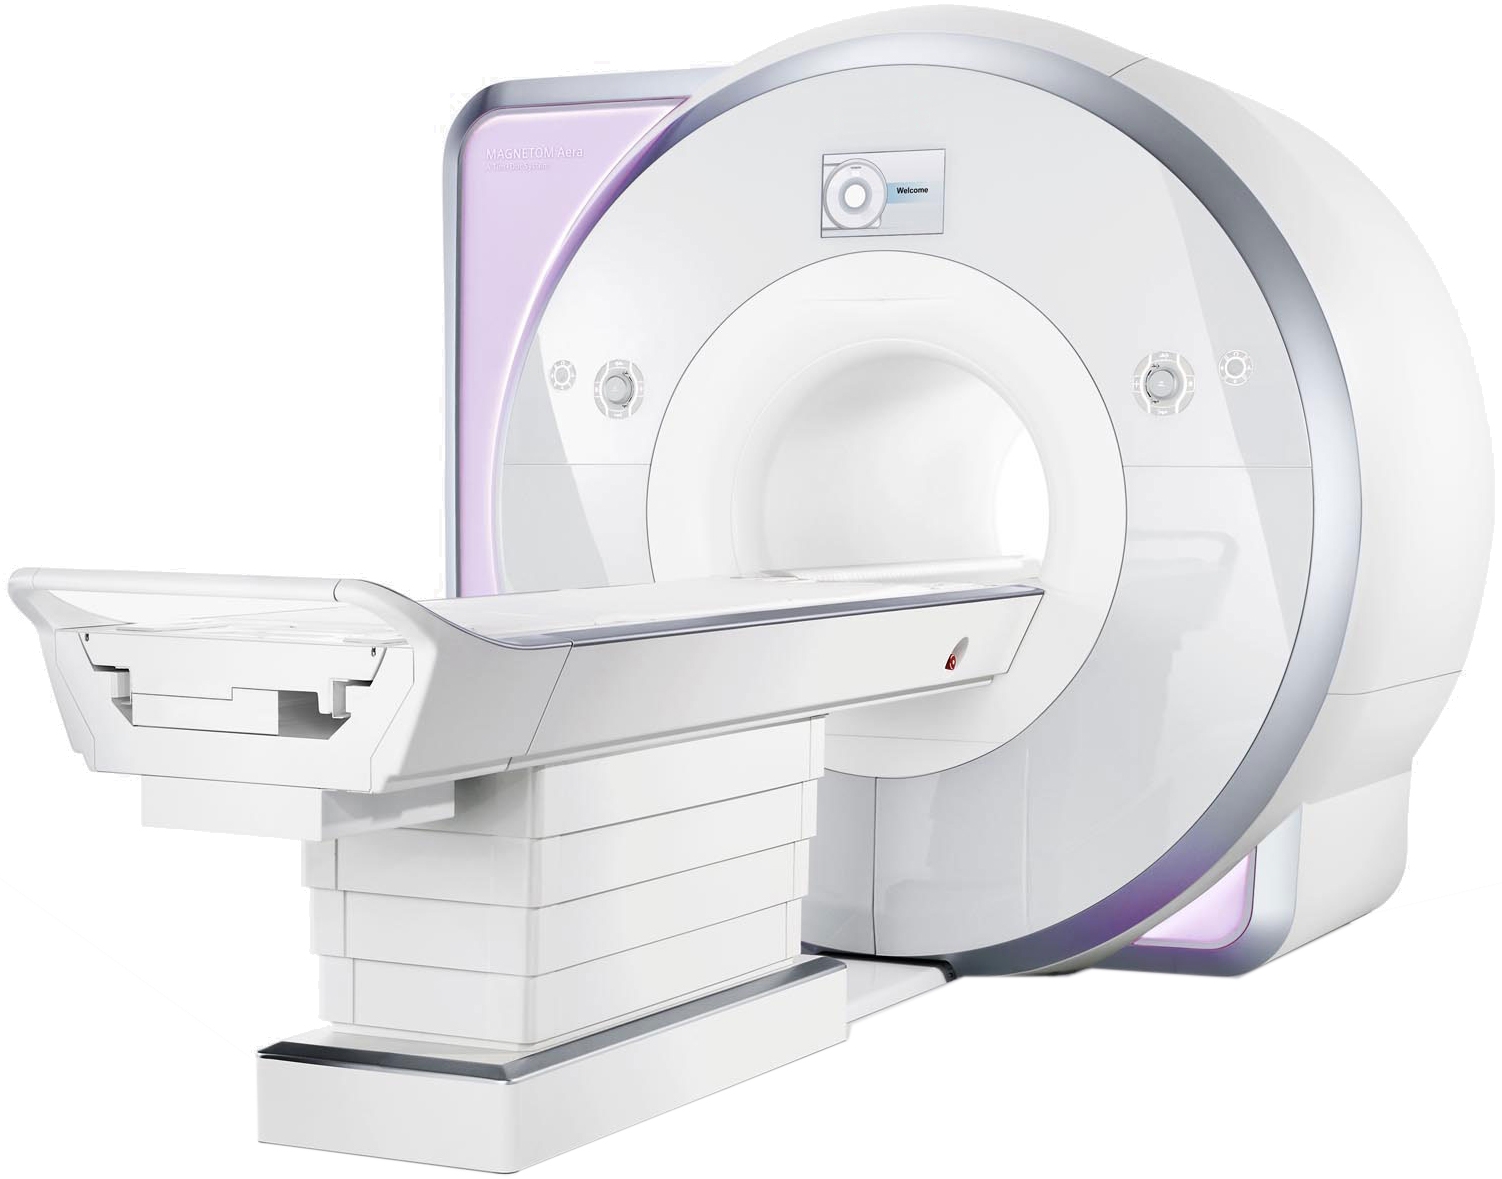 MRI scanner without siemens logo